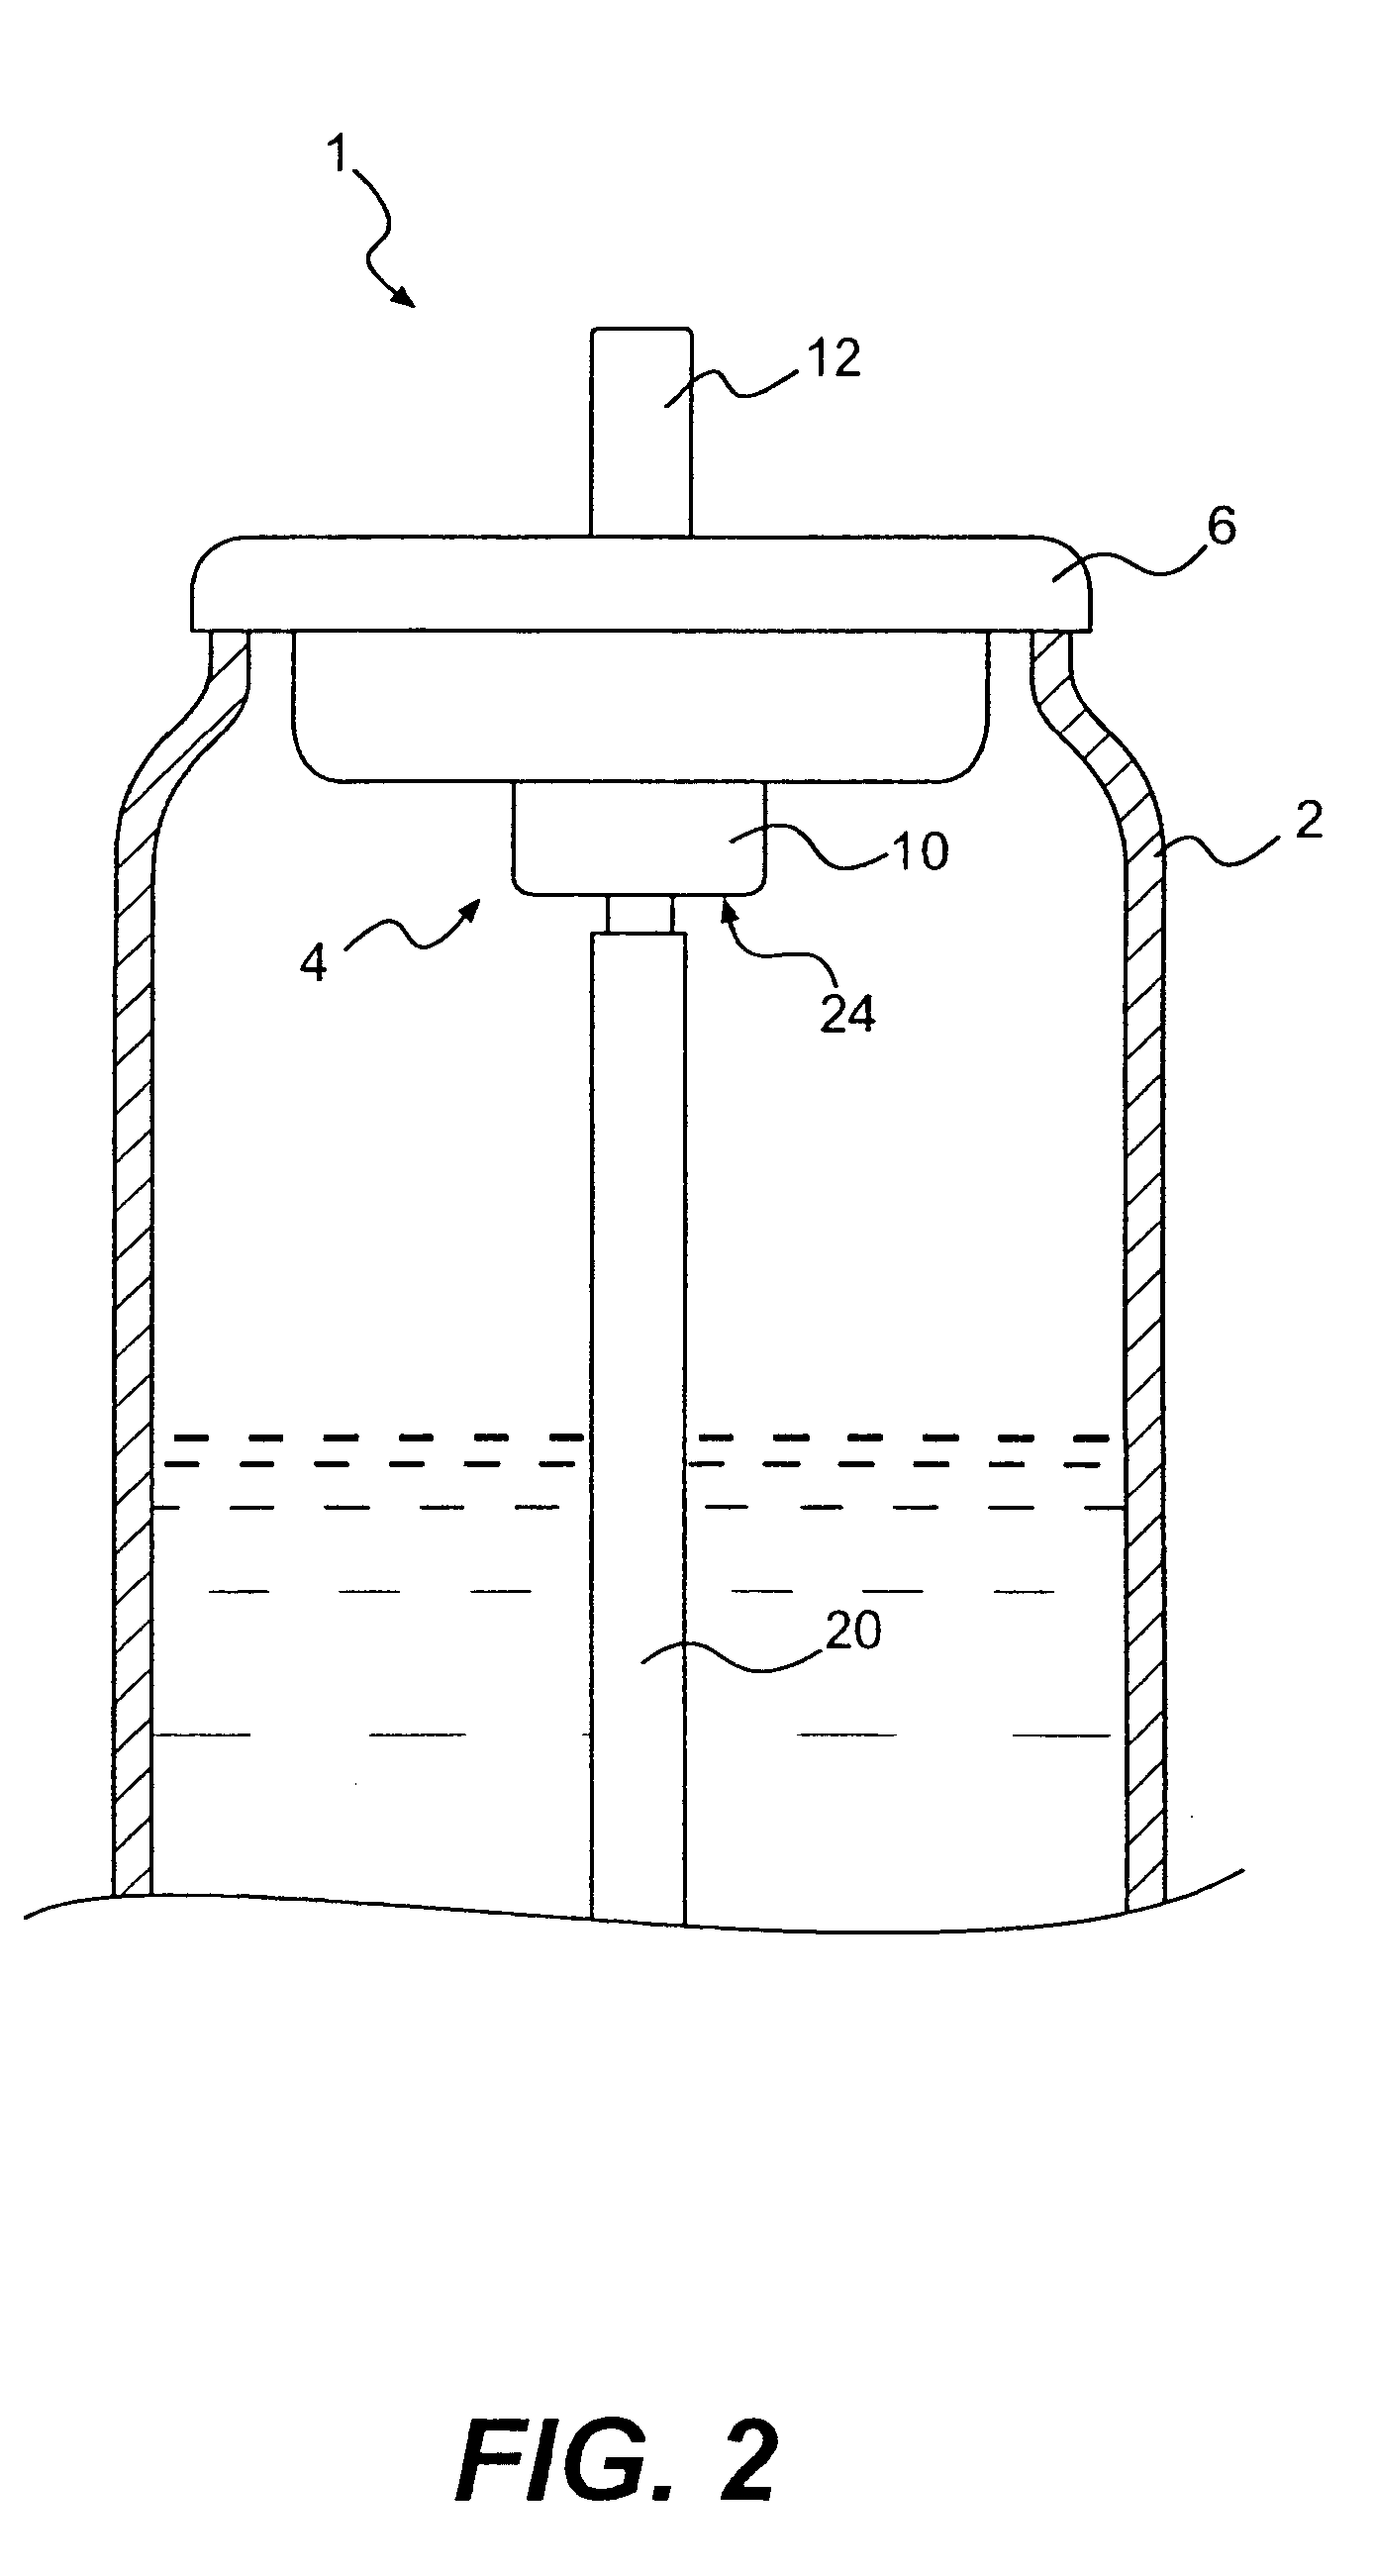 Method of designing improved spray dispenser assemblies